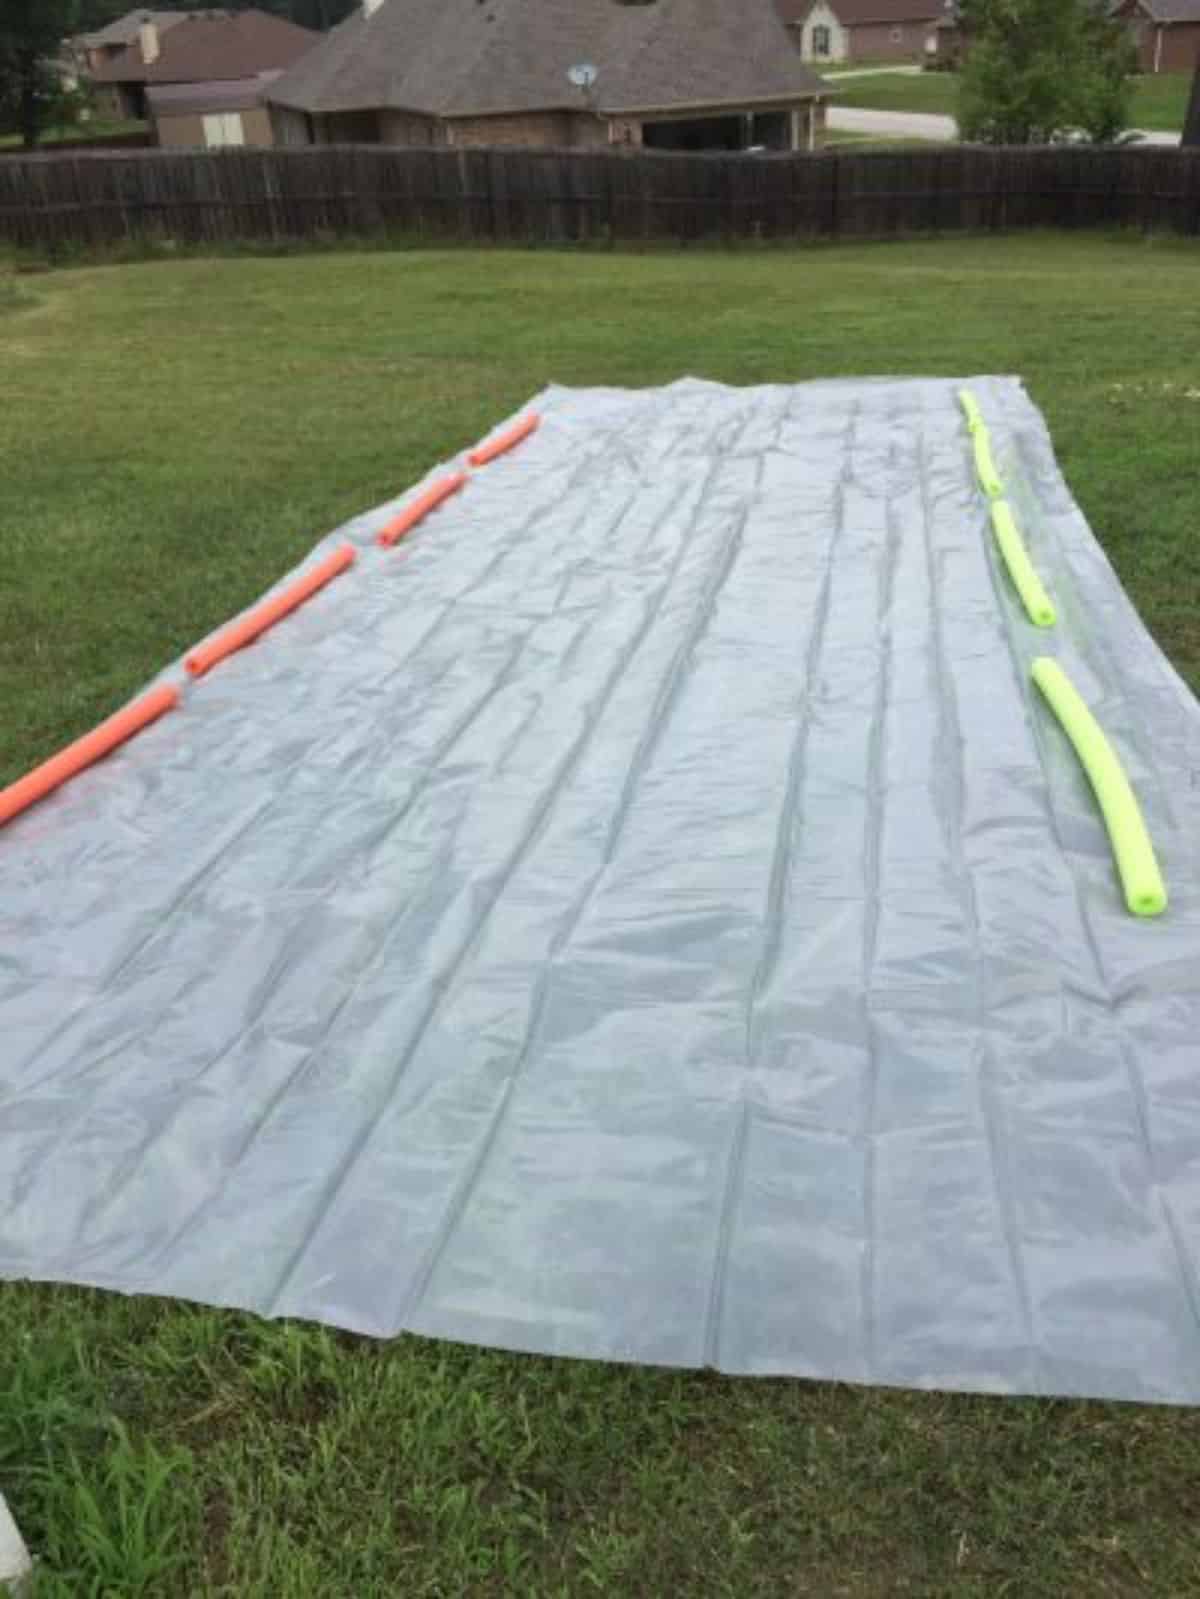 DIY slip and slide game at backyard.